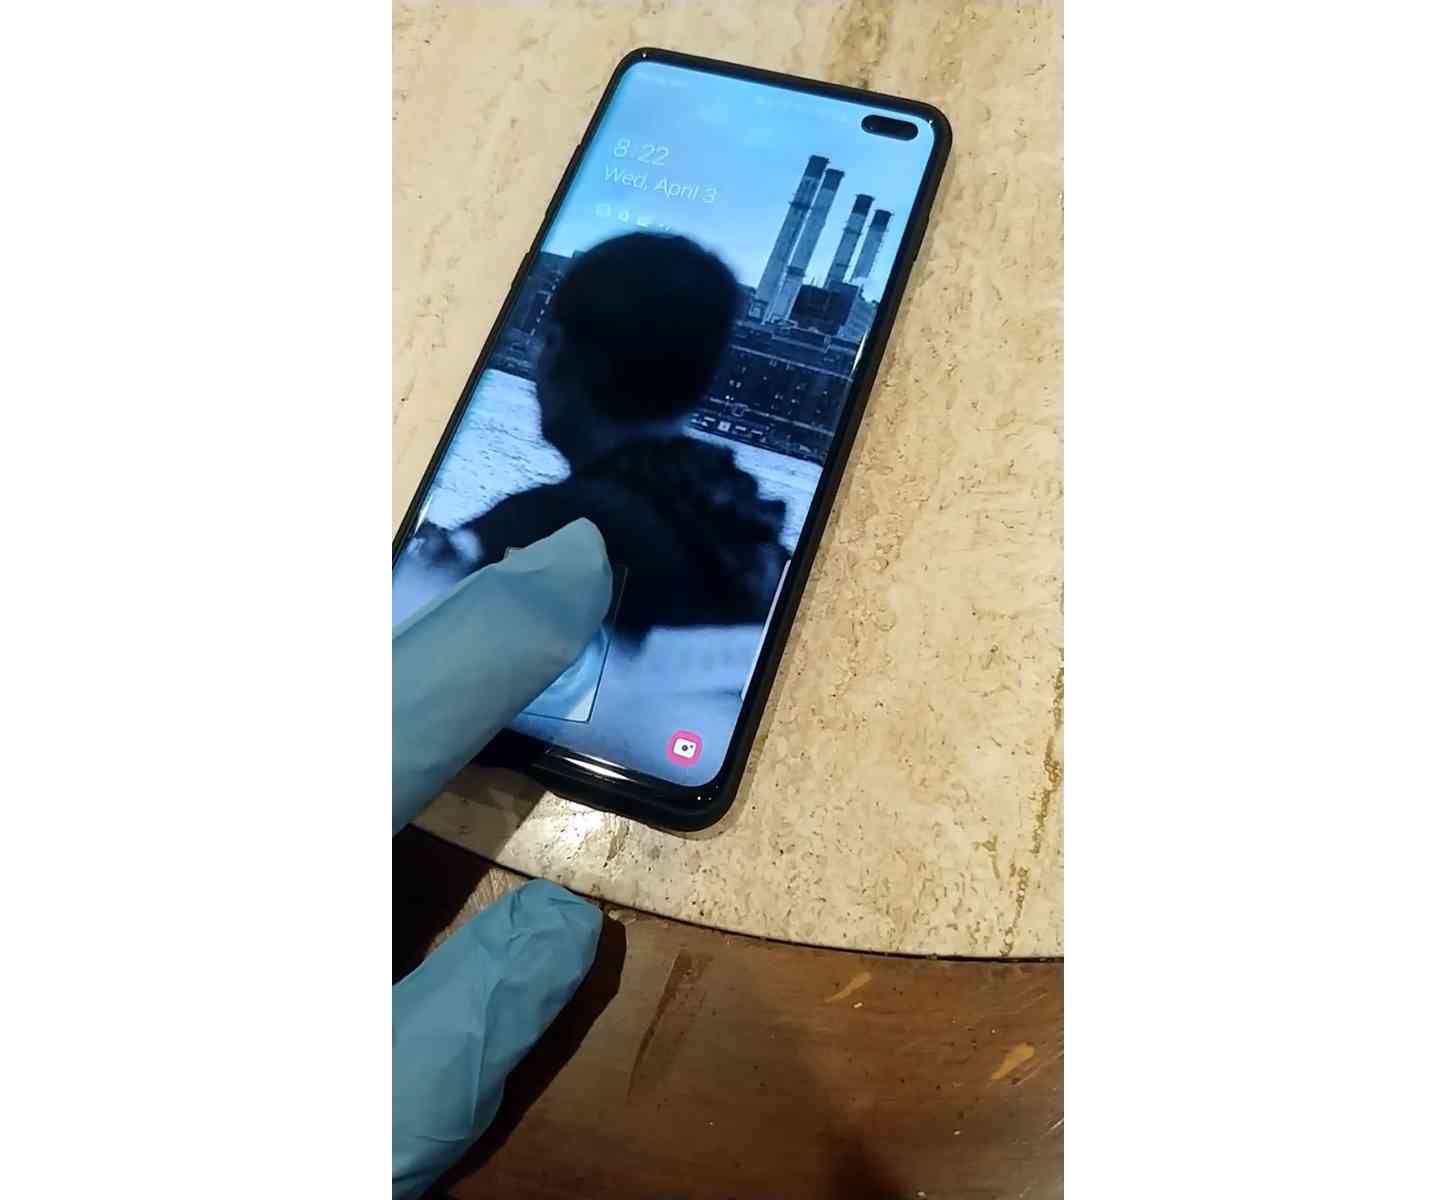 Samsung Galaxy S10 fingerprint sensor hack